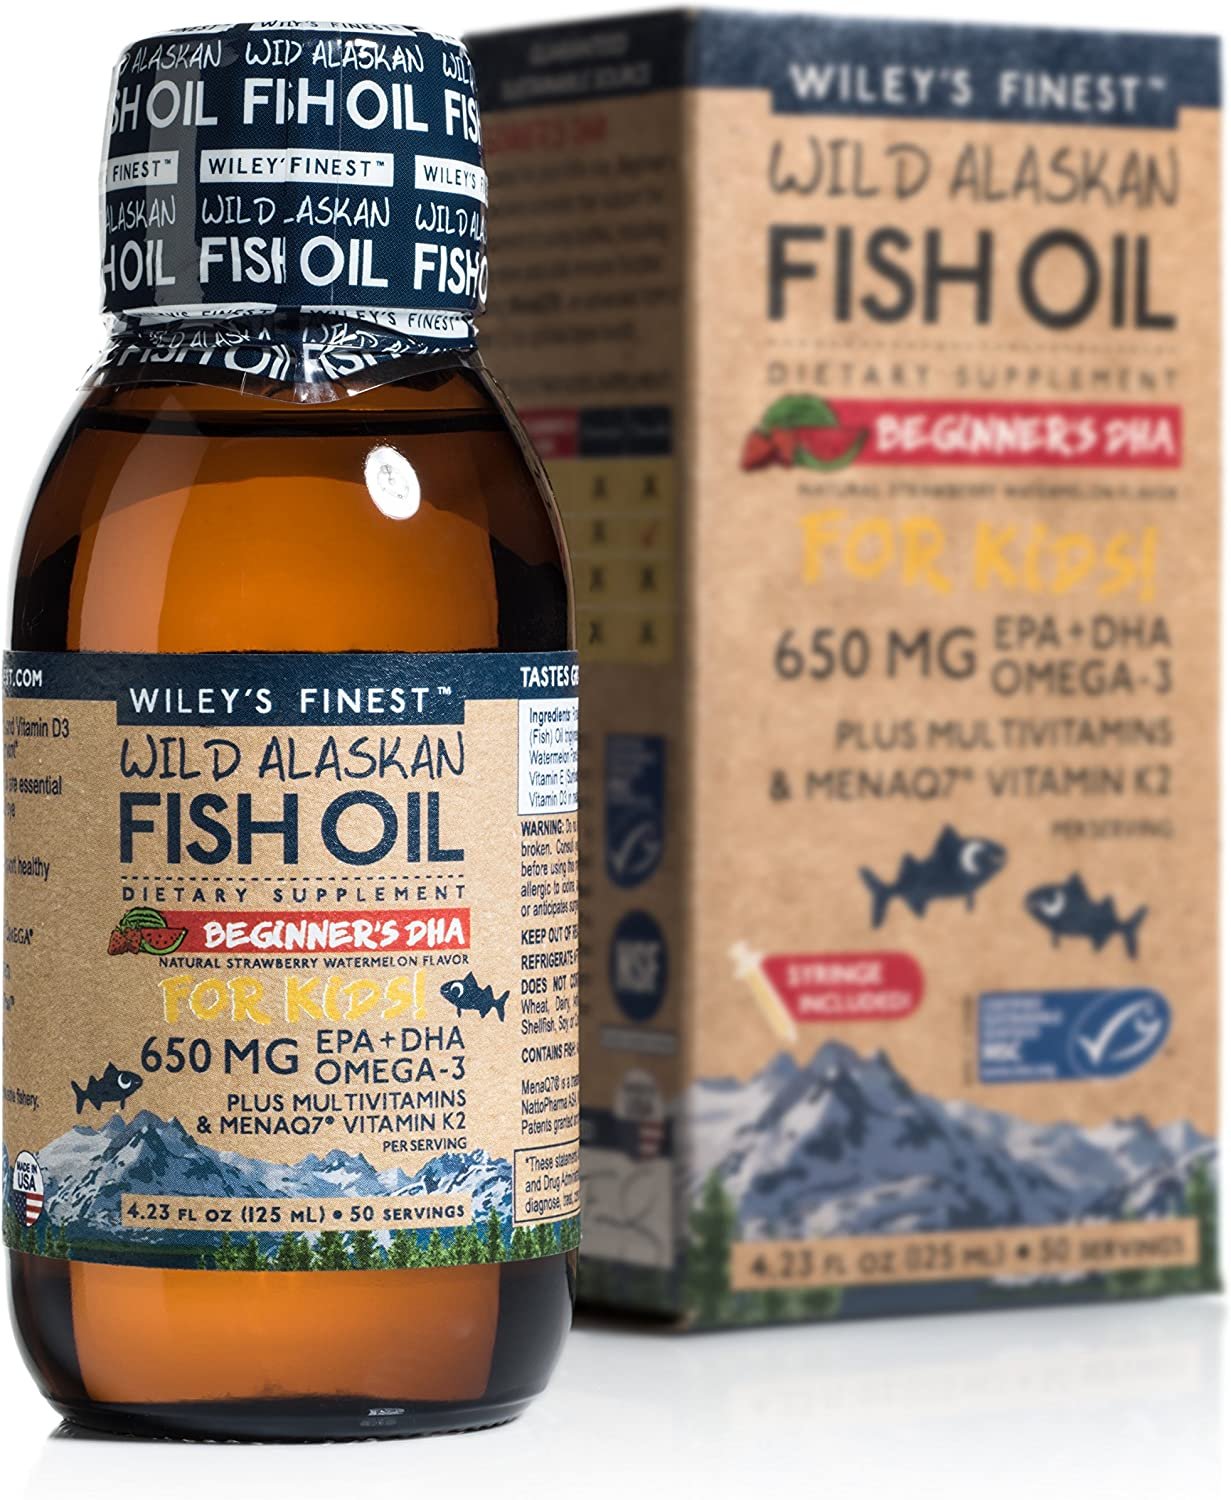 Wiley's Finest Wild Alaskan Fish Oil - Beginner's DHA 650mg EPA + DHA Omega-3 Natural Wild Alaskan Supplement 50 Servings